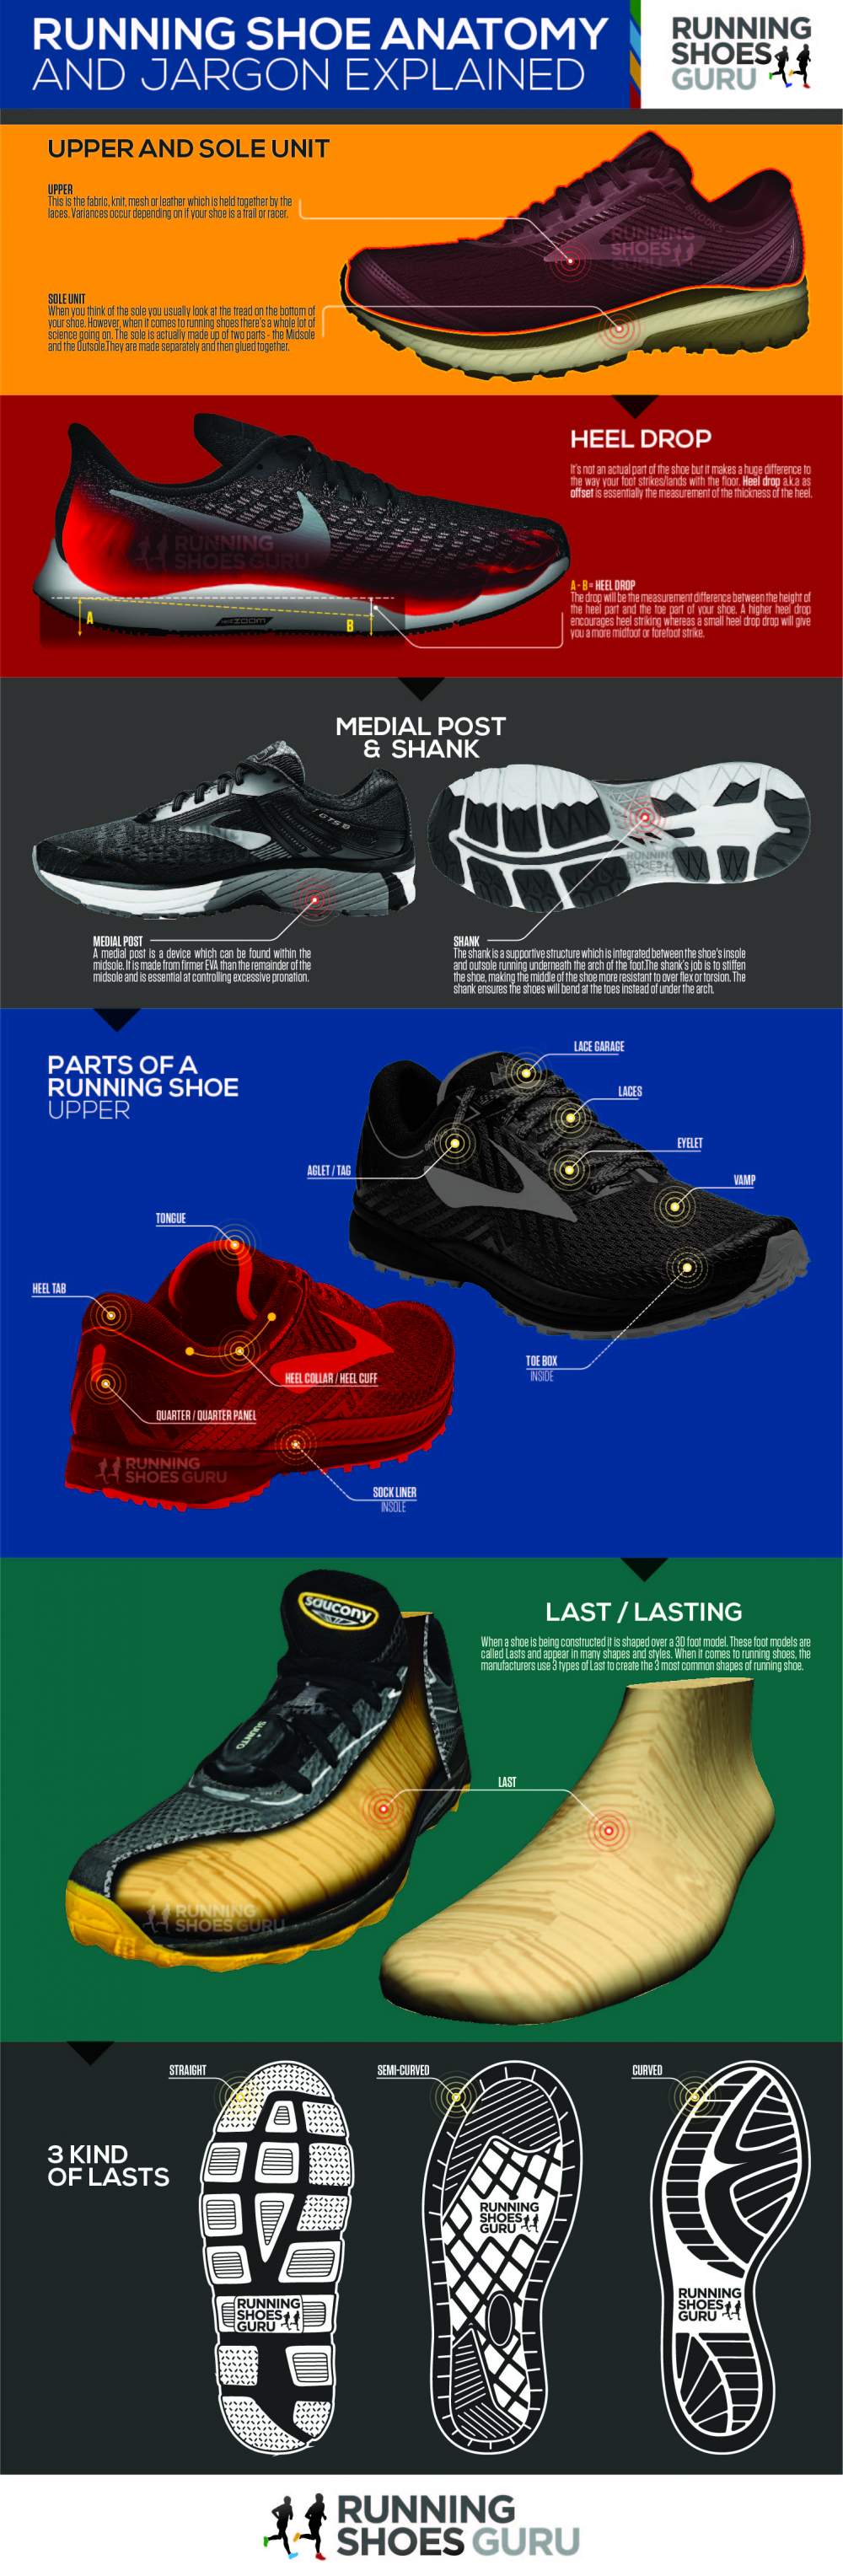 Anatomy of a Running Shoe